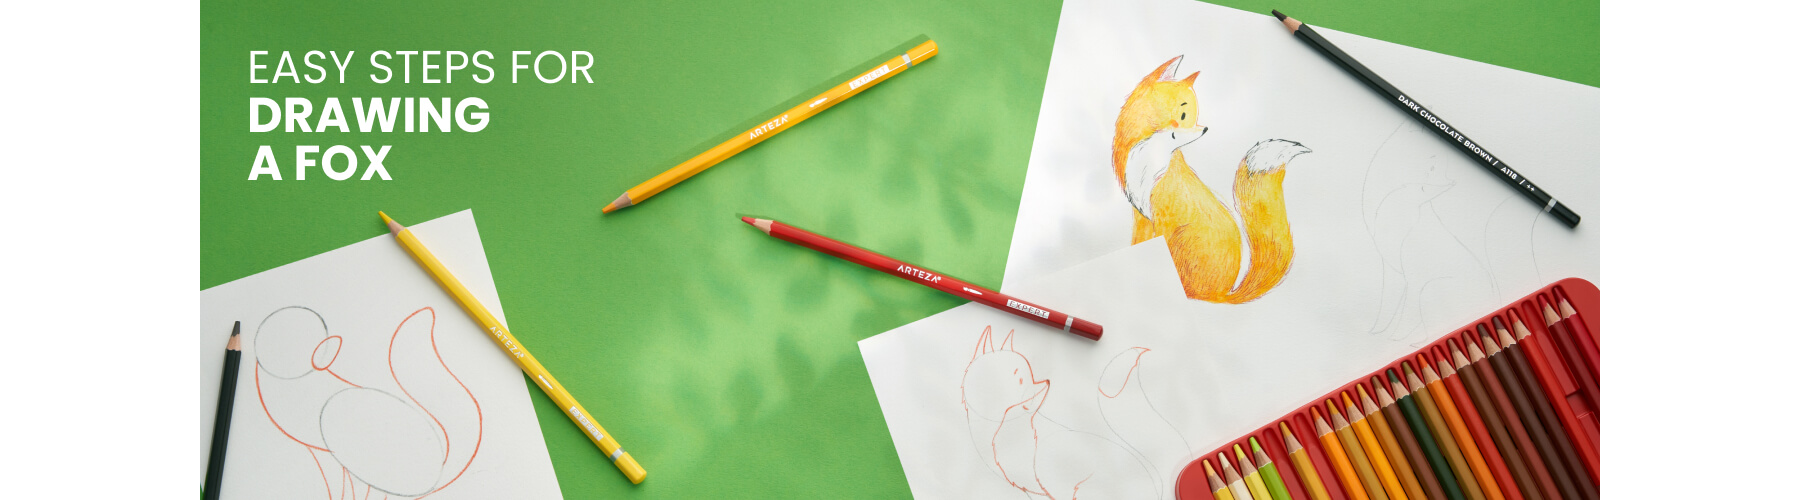 10 Must-Have Beginner Drawing Art Tools –